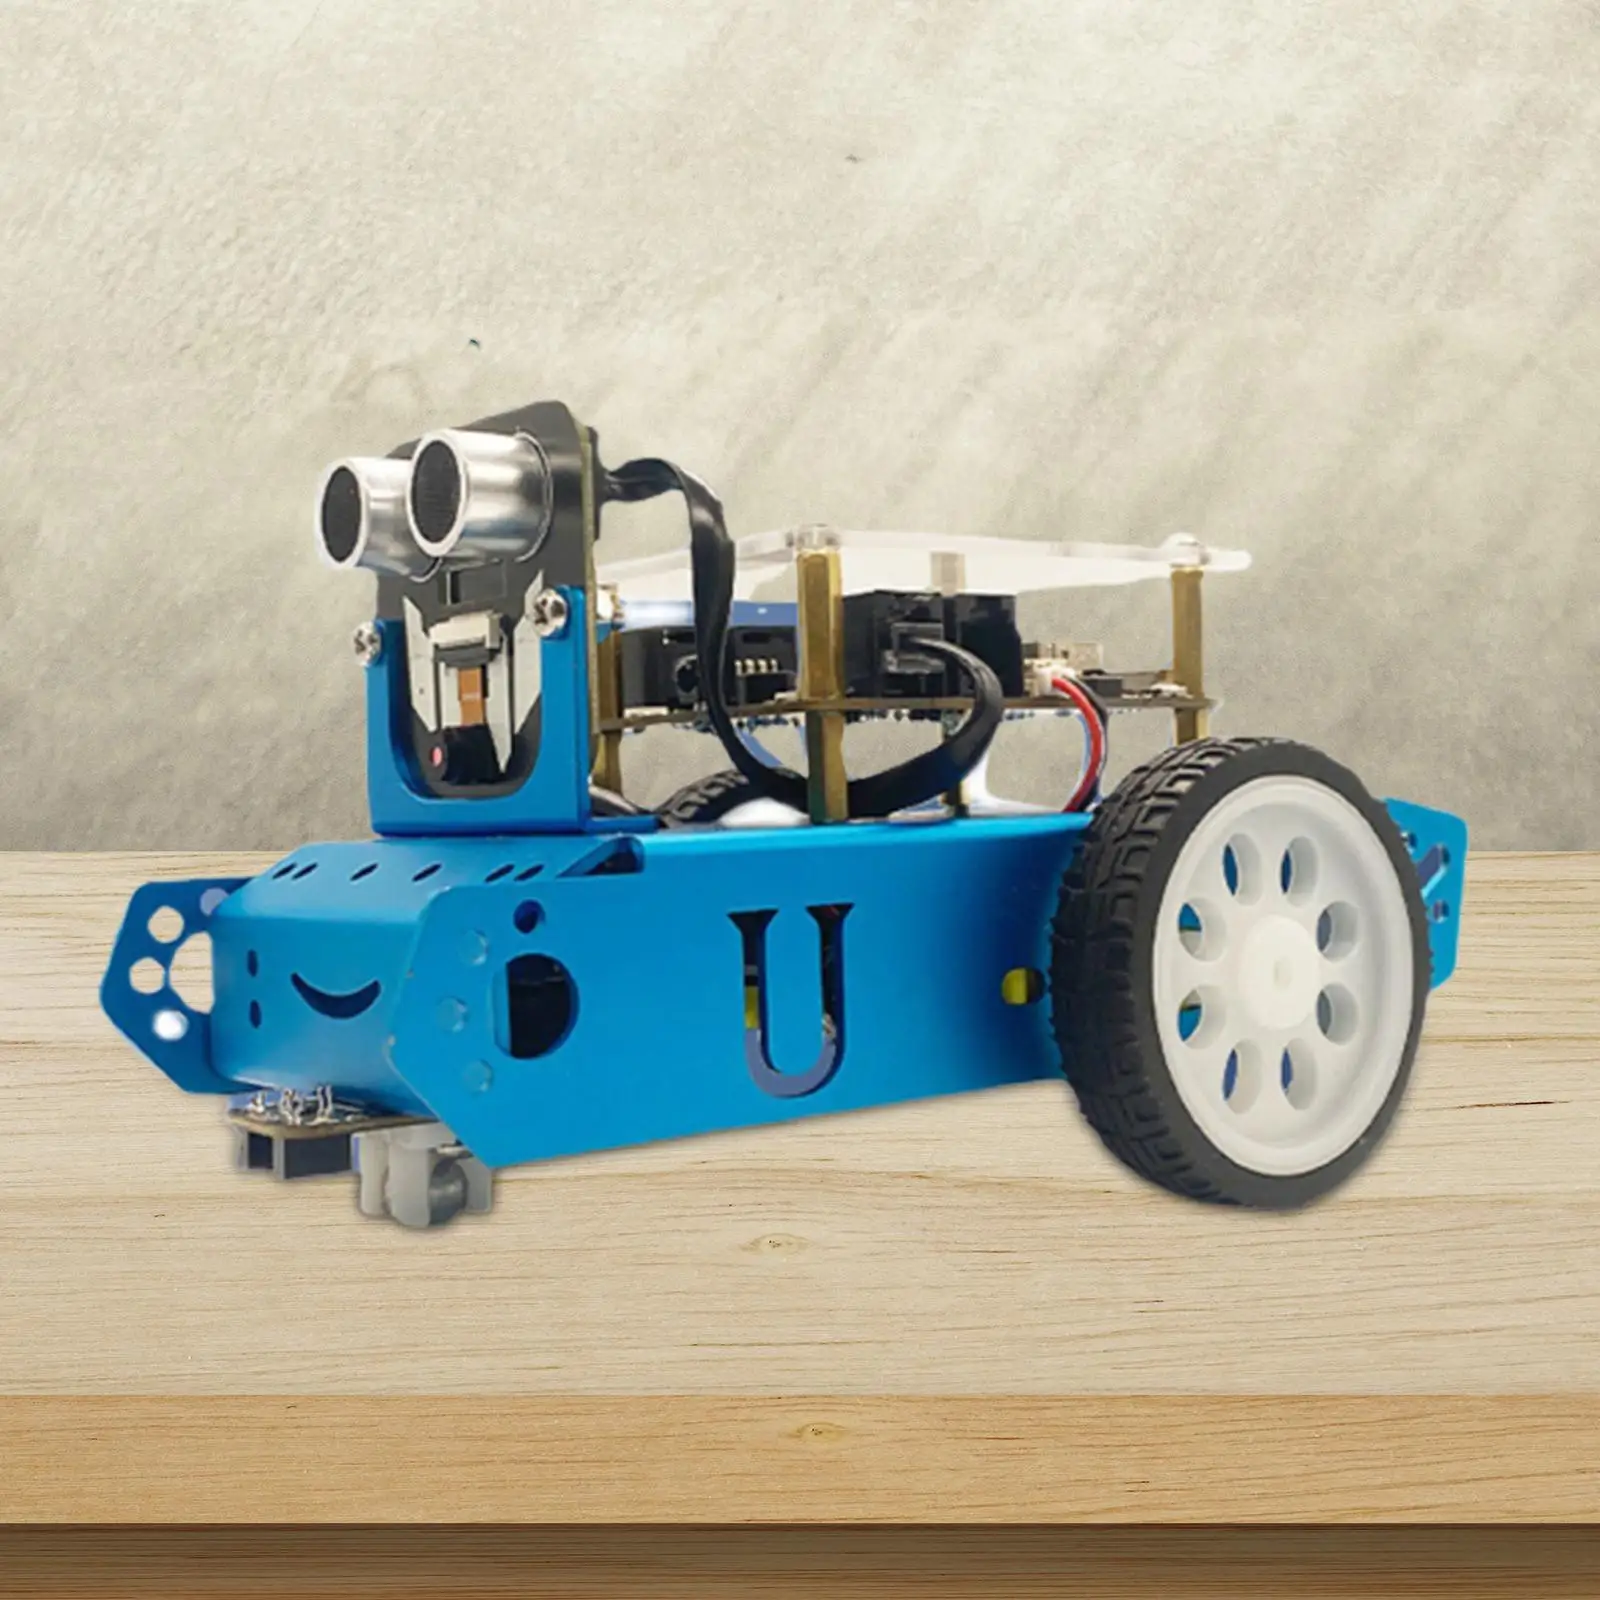 Programming Thrust Robot Self Assembling App Control Compact Robot Car Kits for Electronic Learning Teaching Aids Mathematics